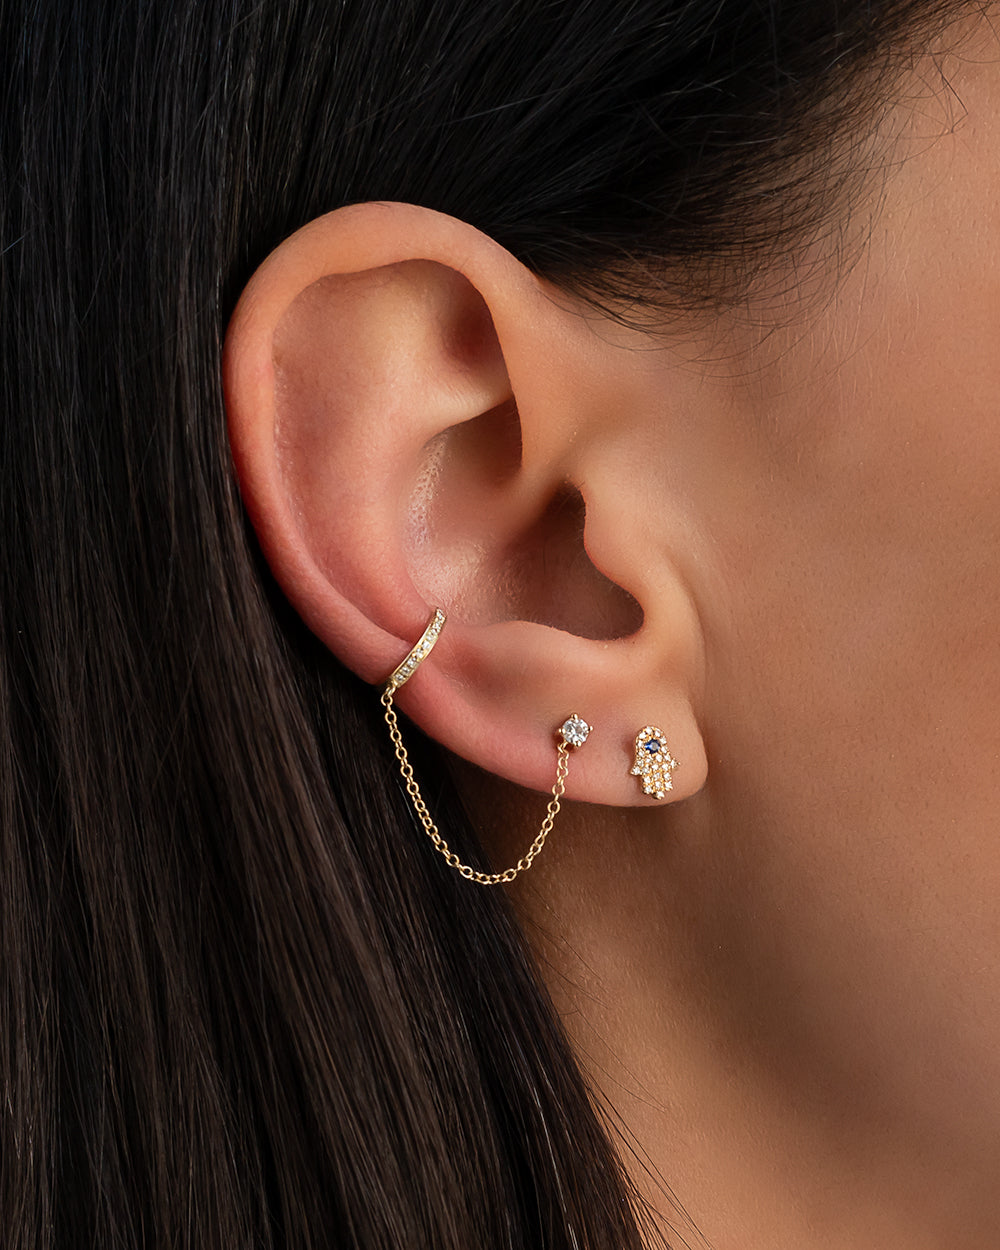 Gold Drop Ear Cuff Earrings | Karen Millen